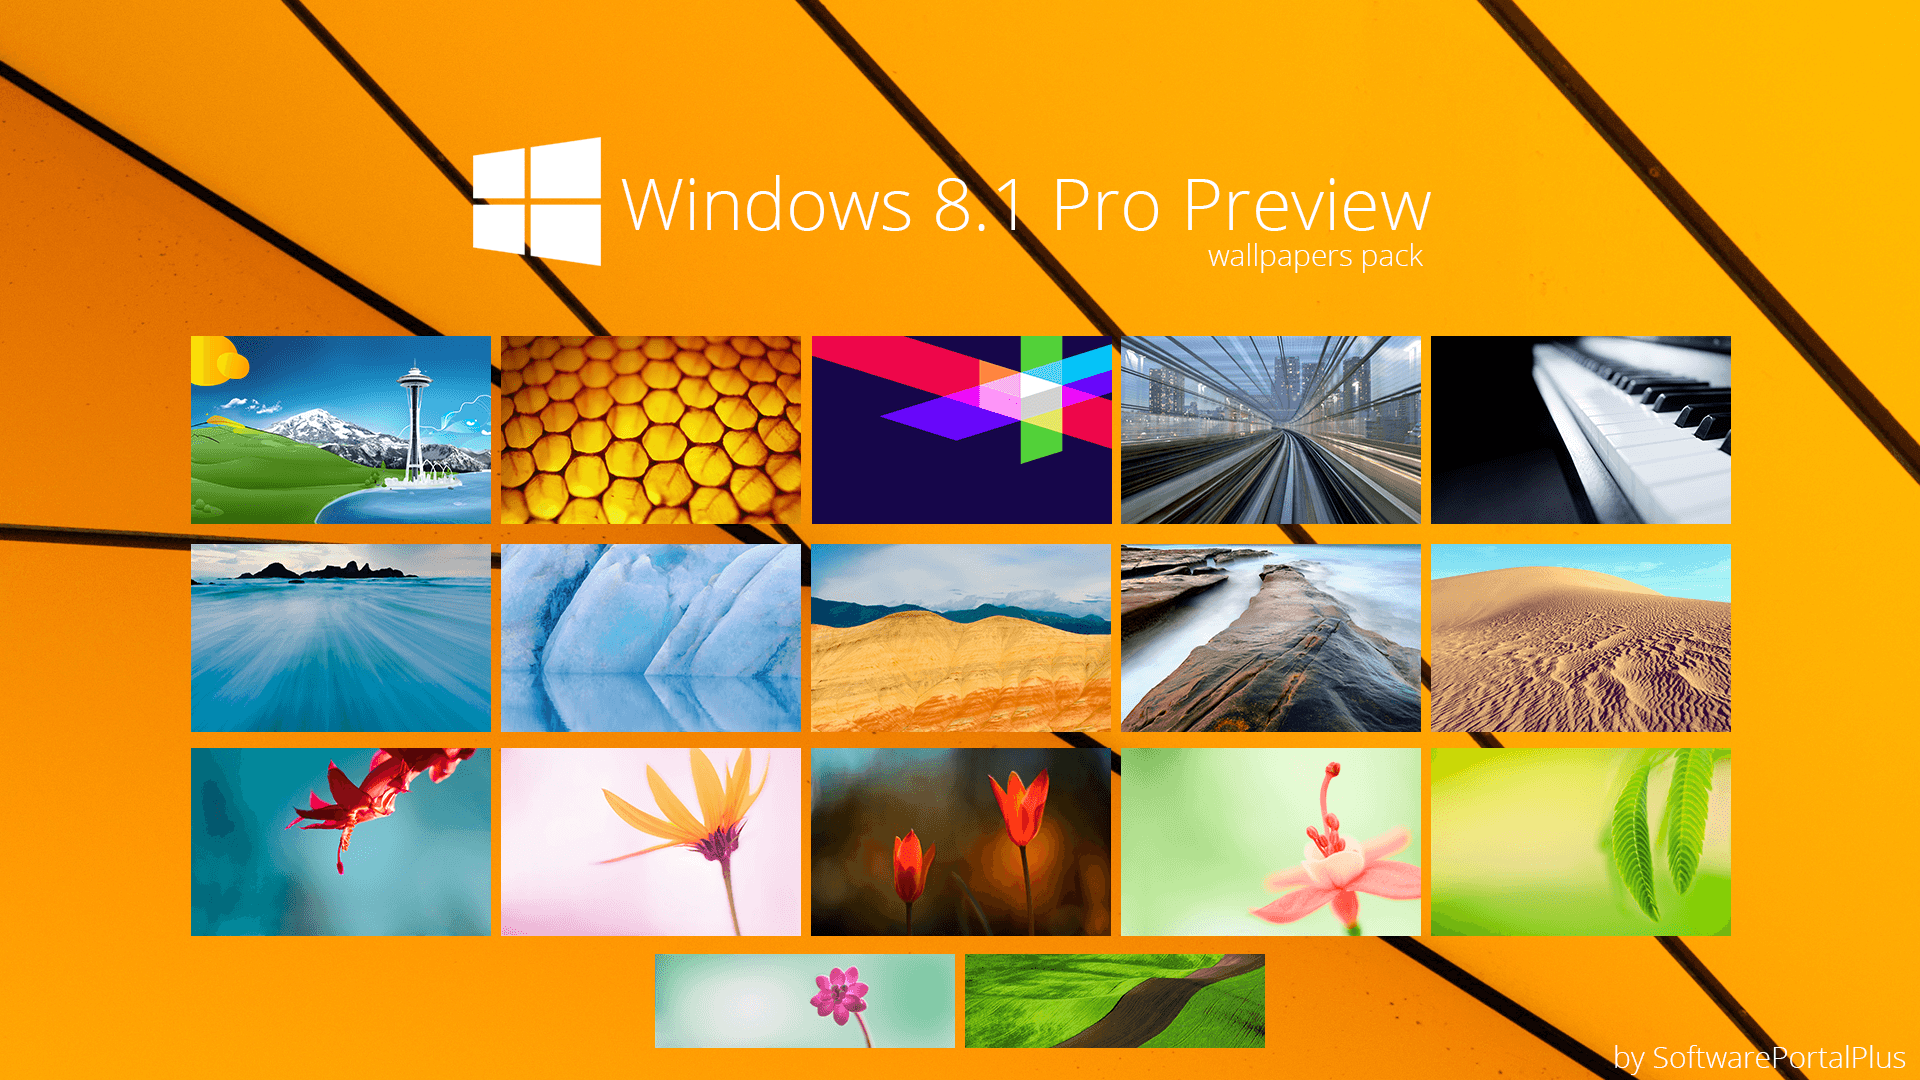 Windows 8.1 Pro Proview, Wallpaper Pack